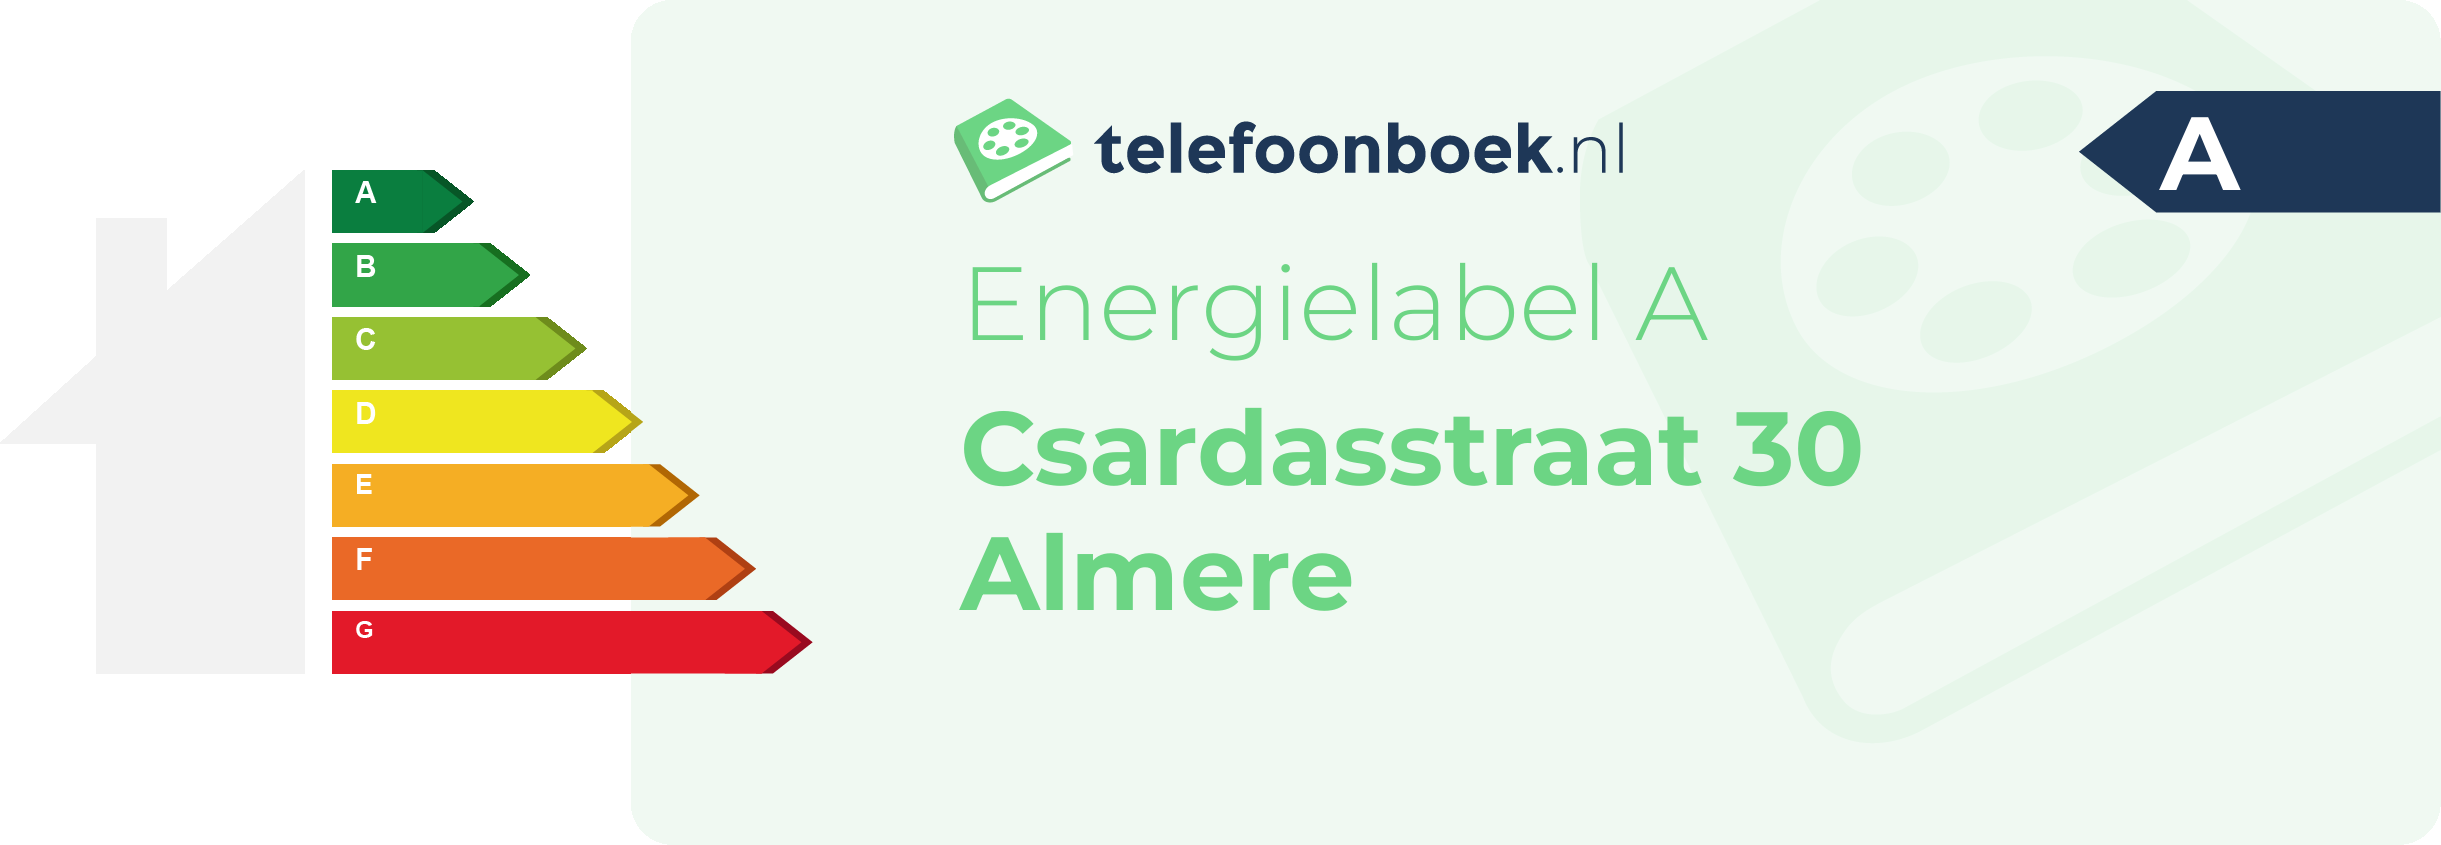 Energielabel Csardasstraat 30 Almere